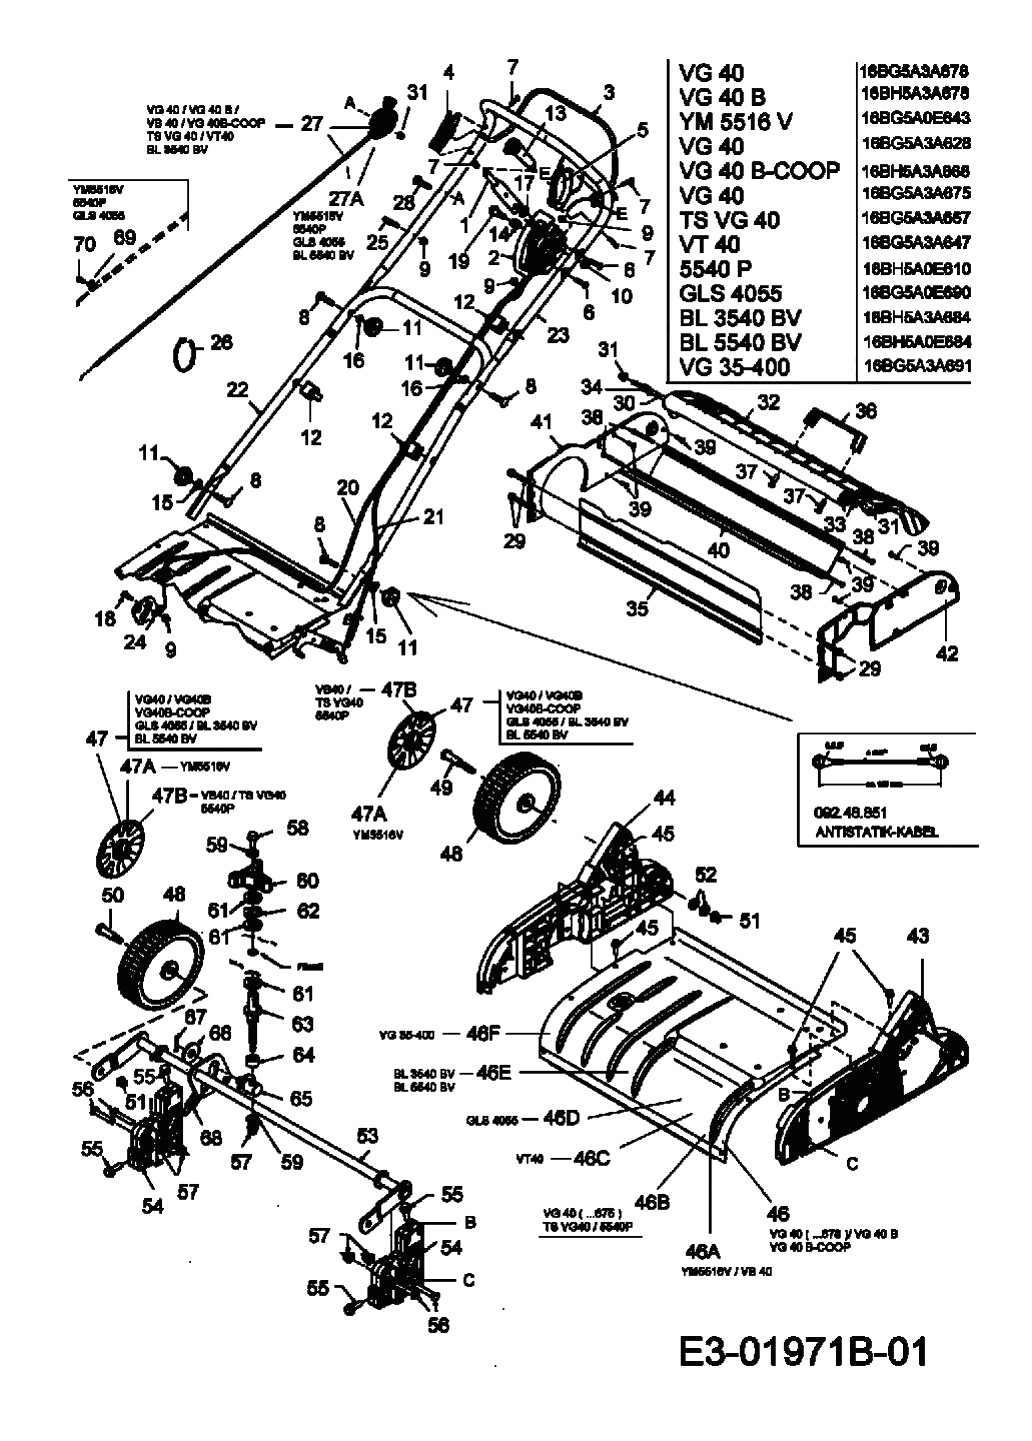 MTD Артикул 16BG5A0E678 (год выпуска 2006). Ручка, регулятор высоты, колеса